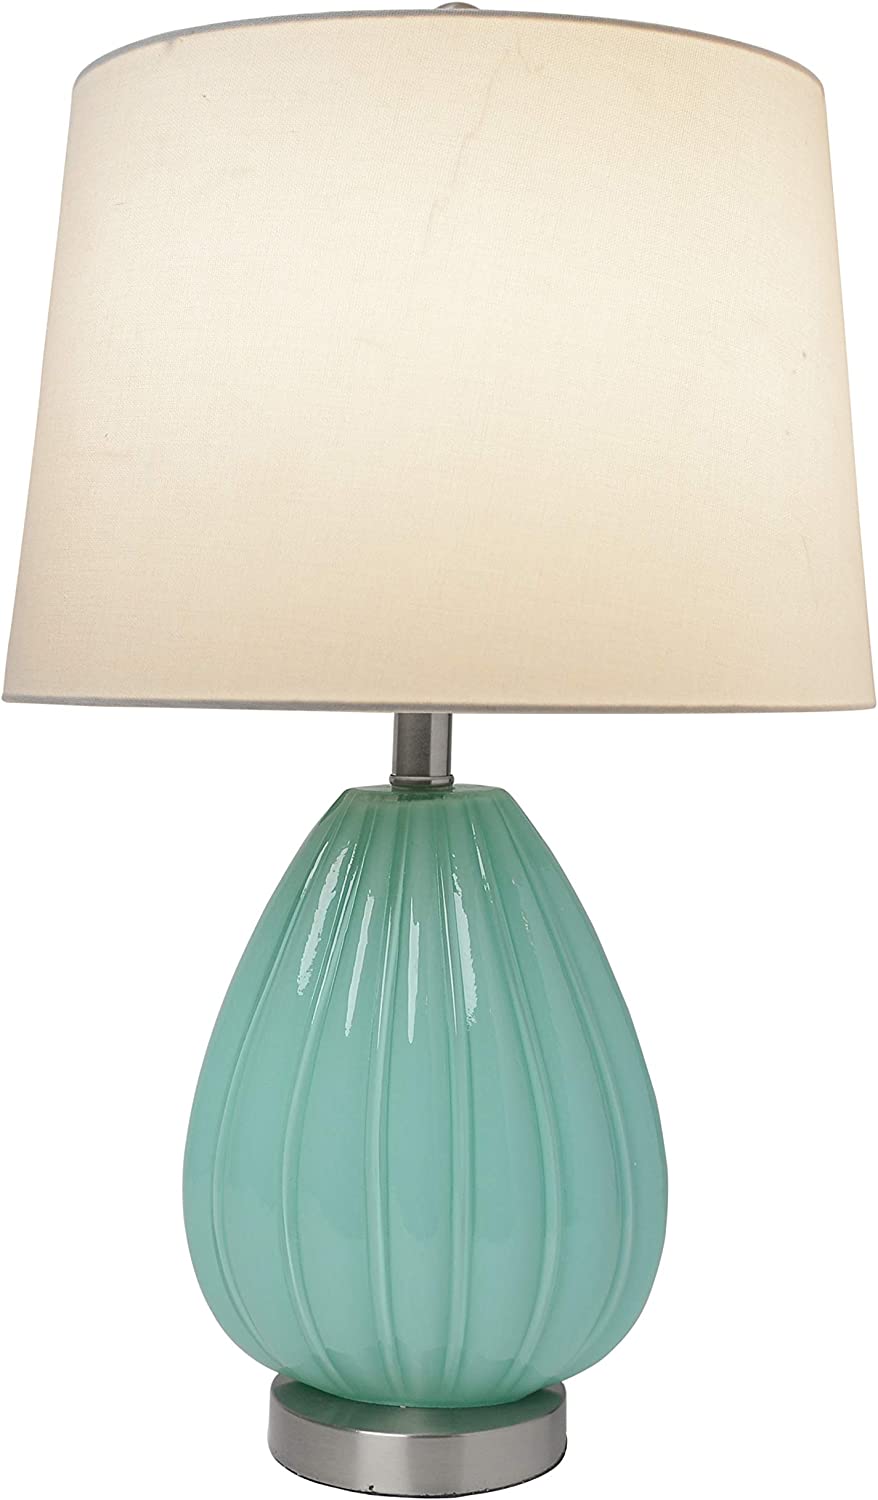 Elegant Designs LT3320-TEL Creased Fabric Shade Table Lamp, Teal/White